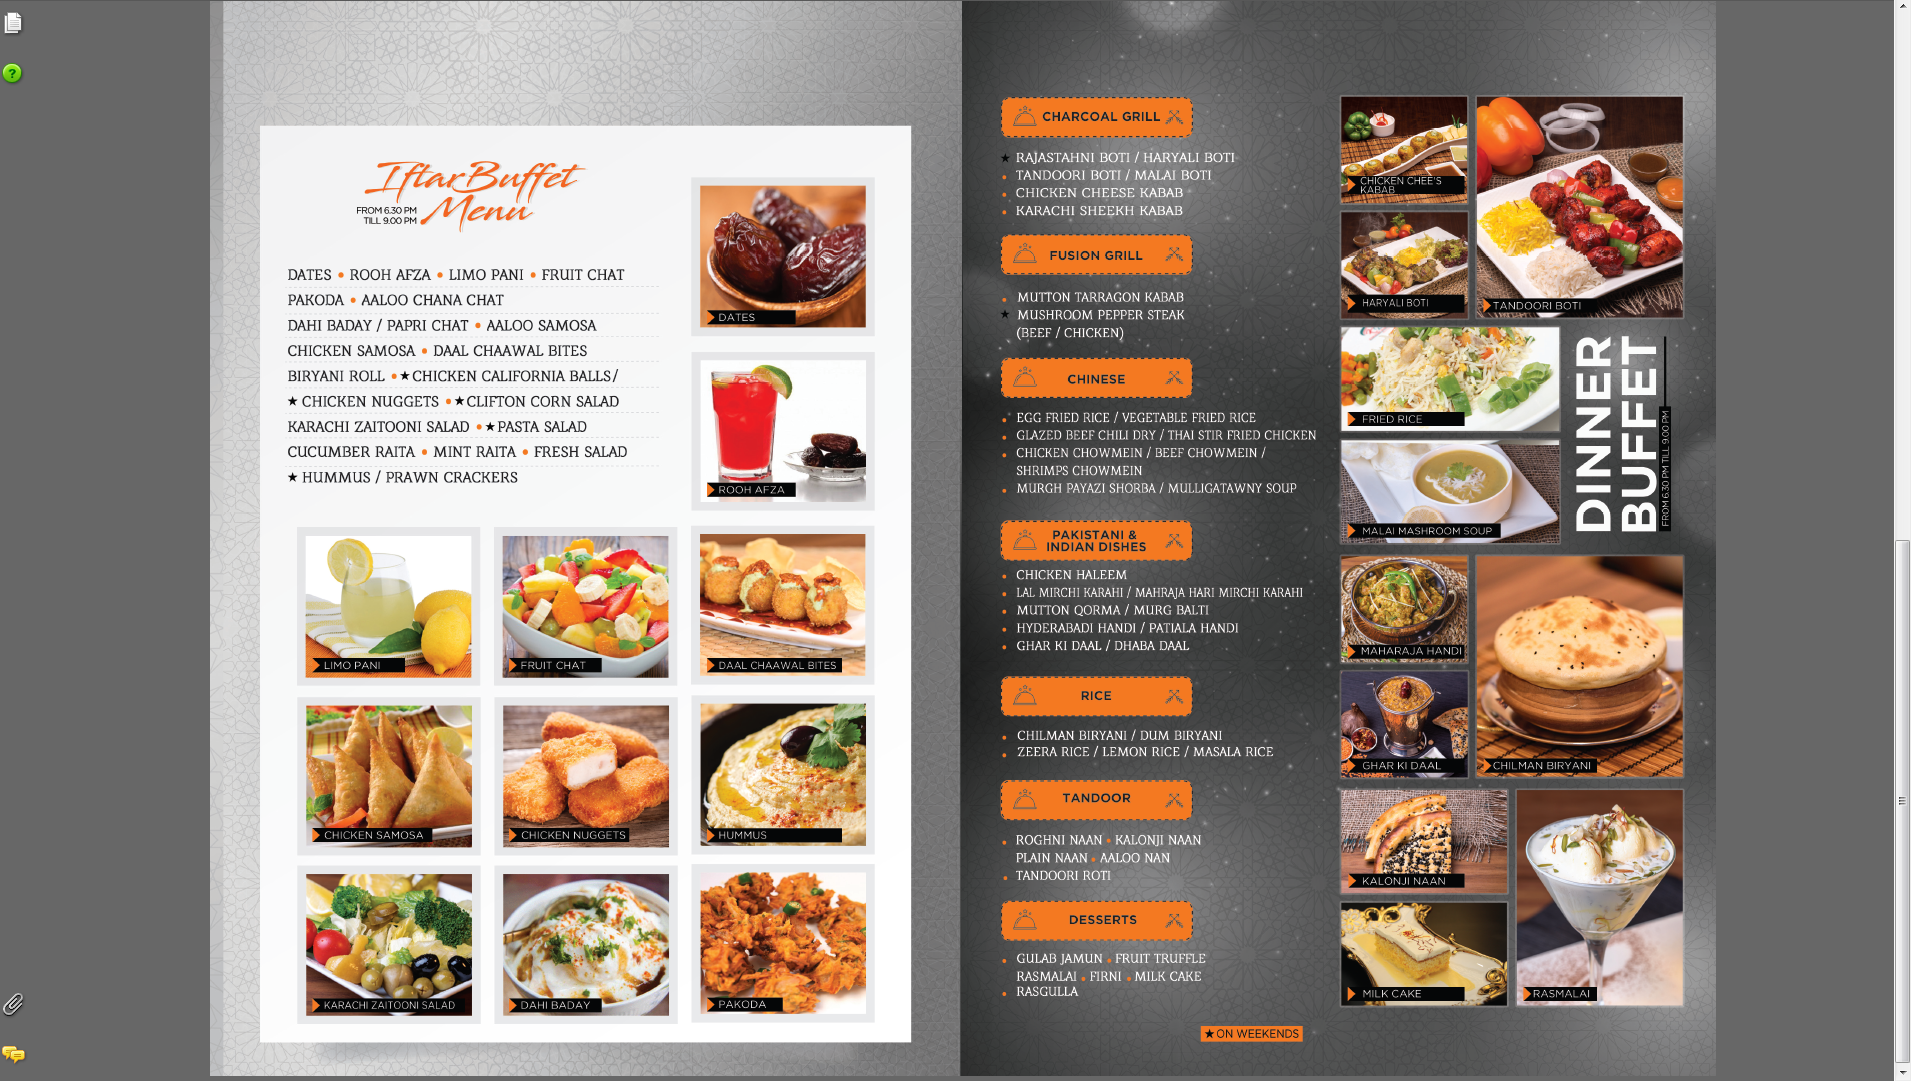 Karachi Grill Restaurant menu